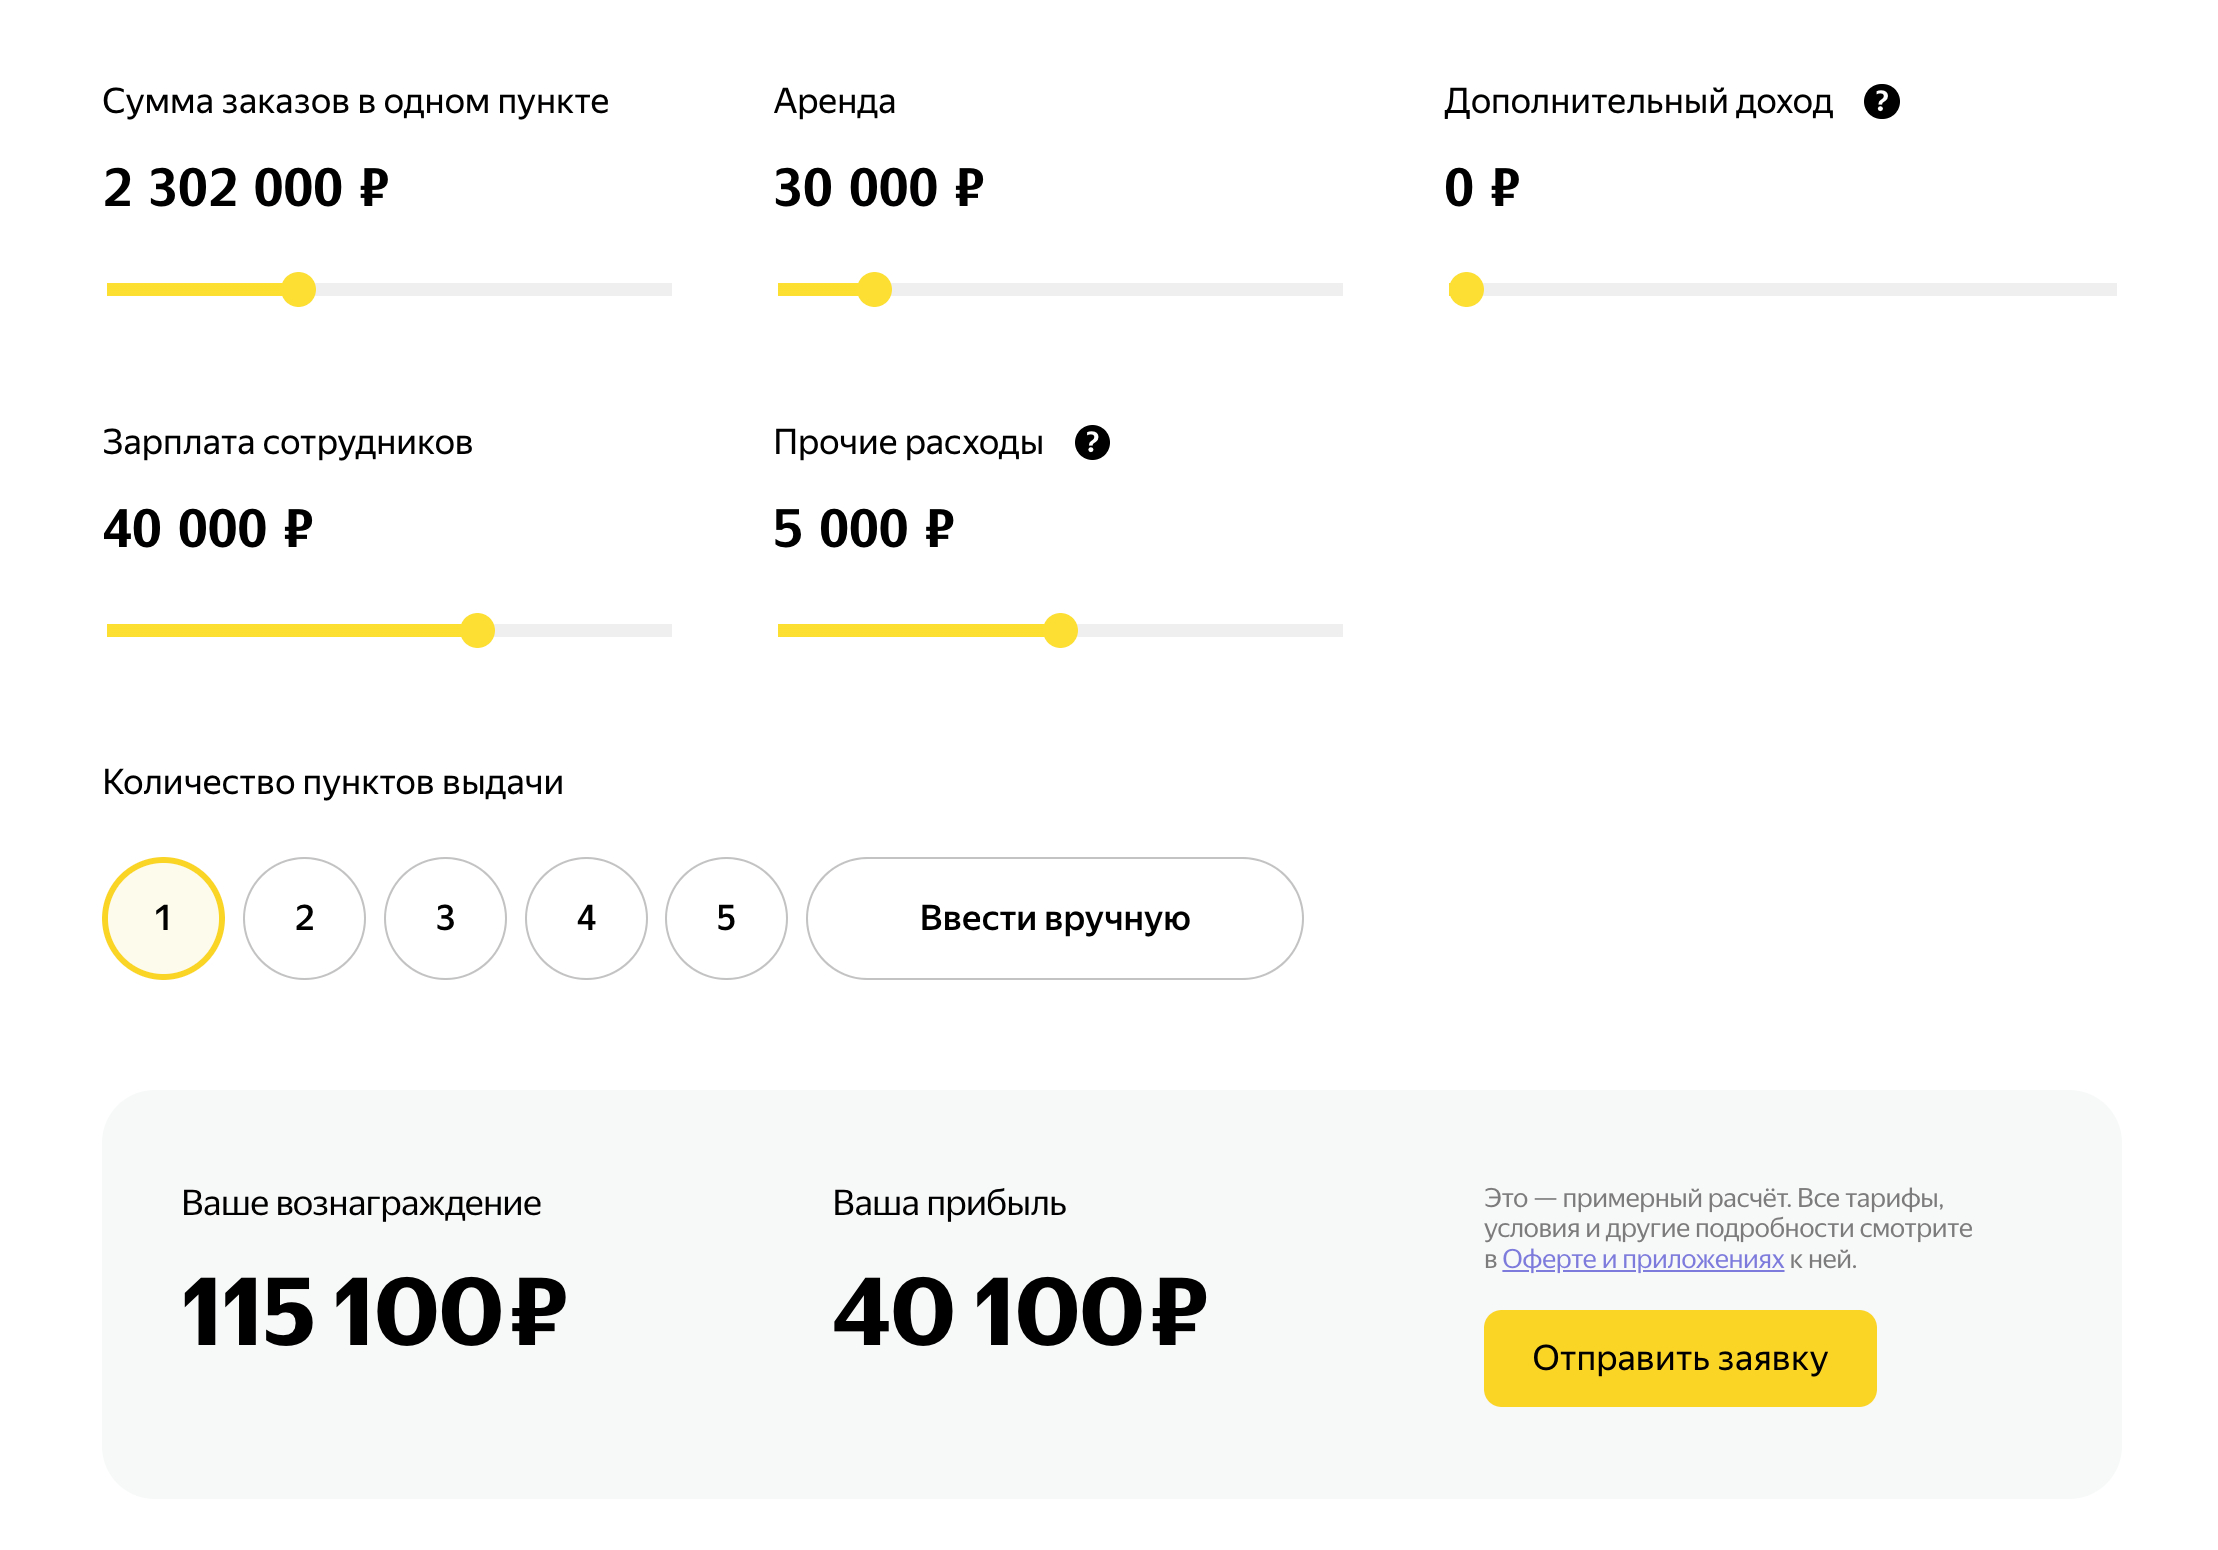 Калькулятор дохода пункта выдачи на сайте «Яндекс-маркета»